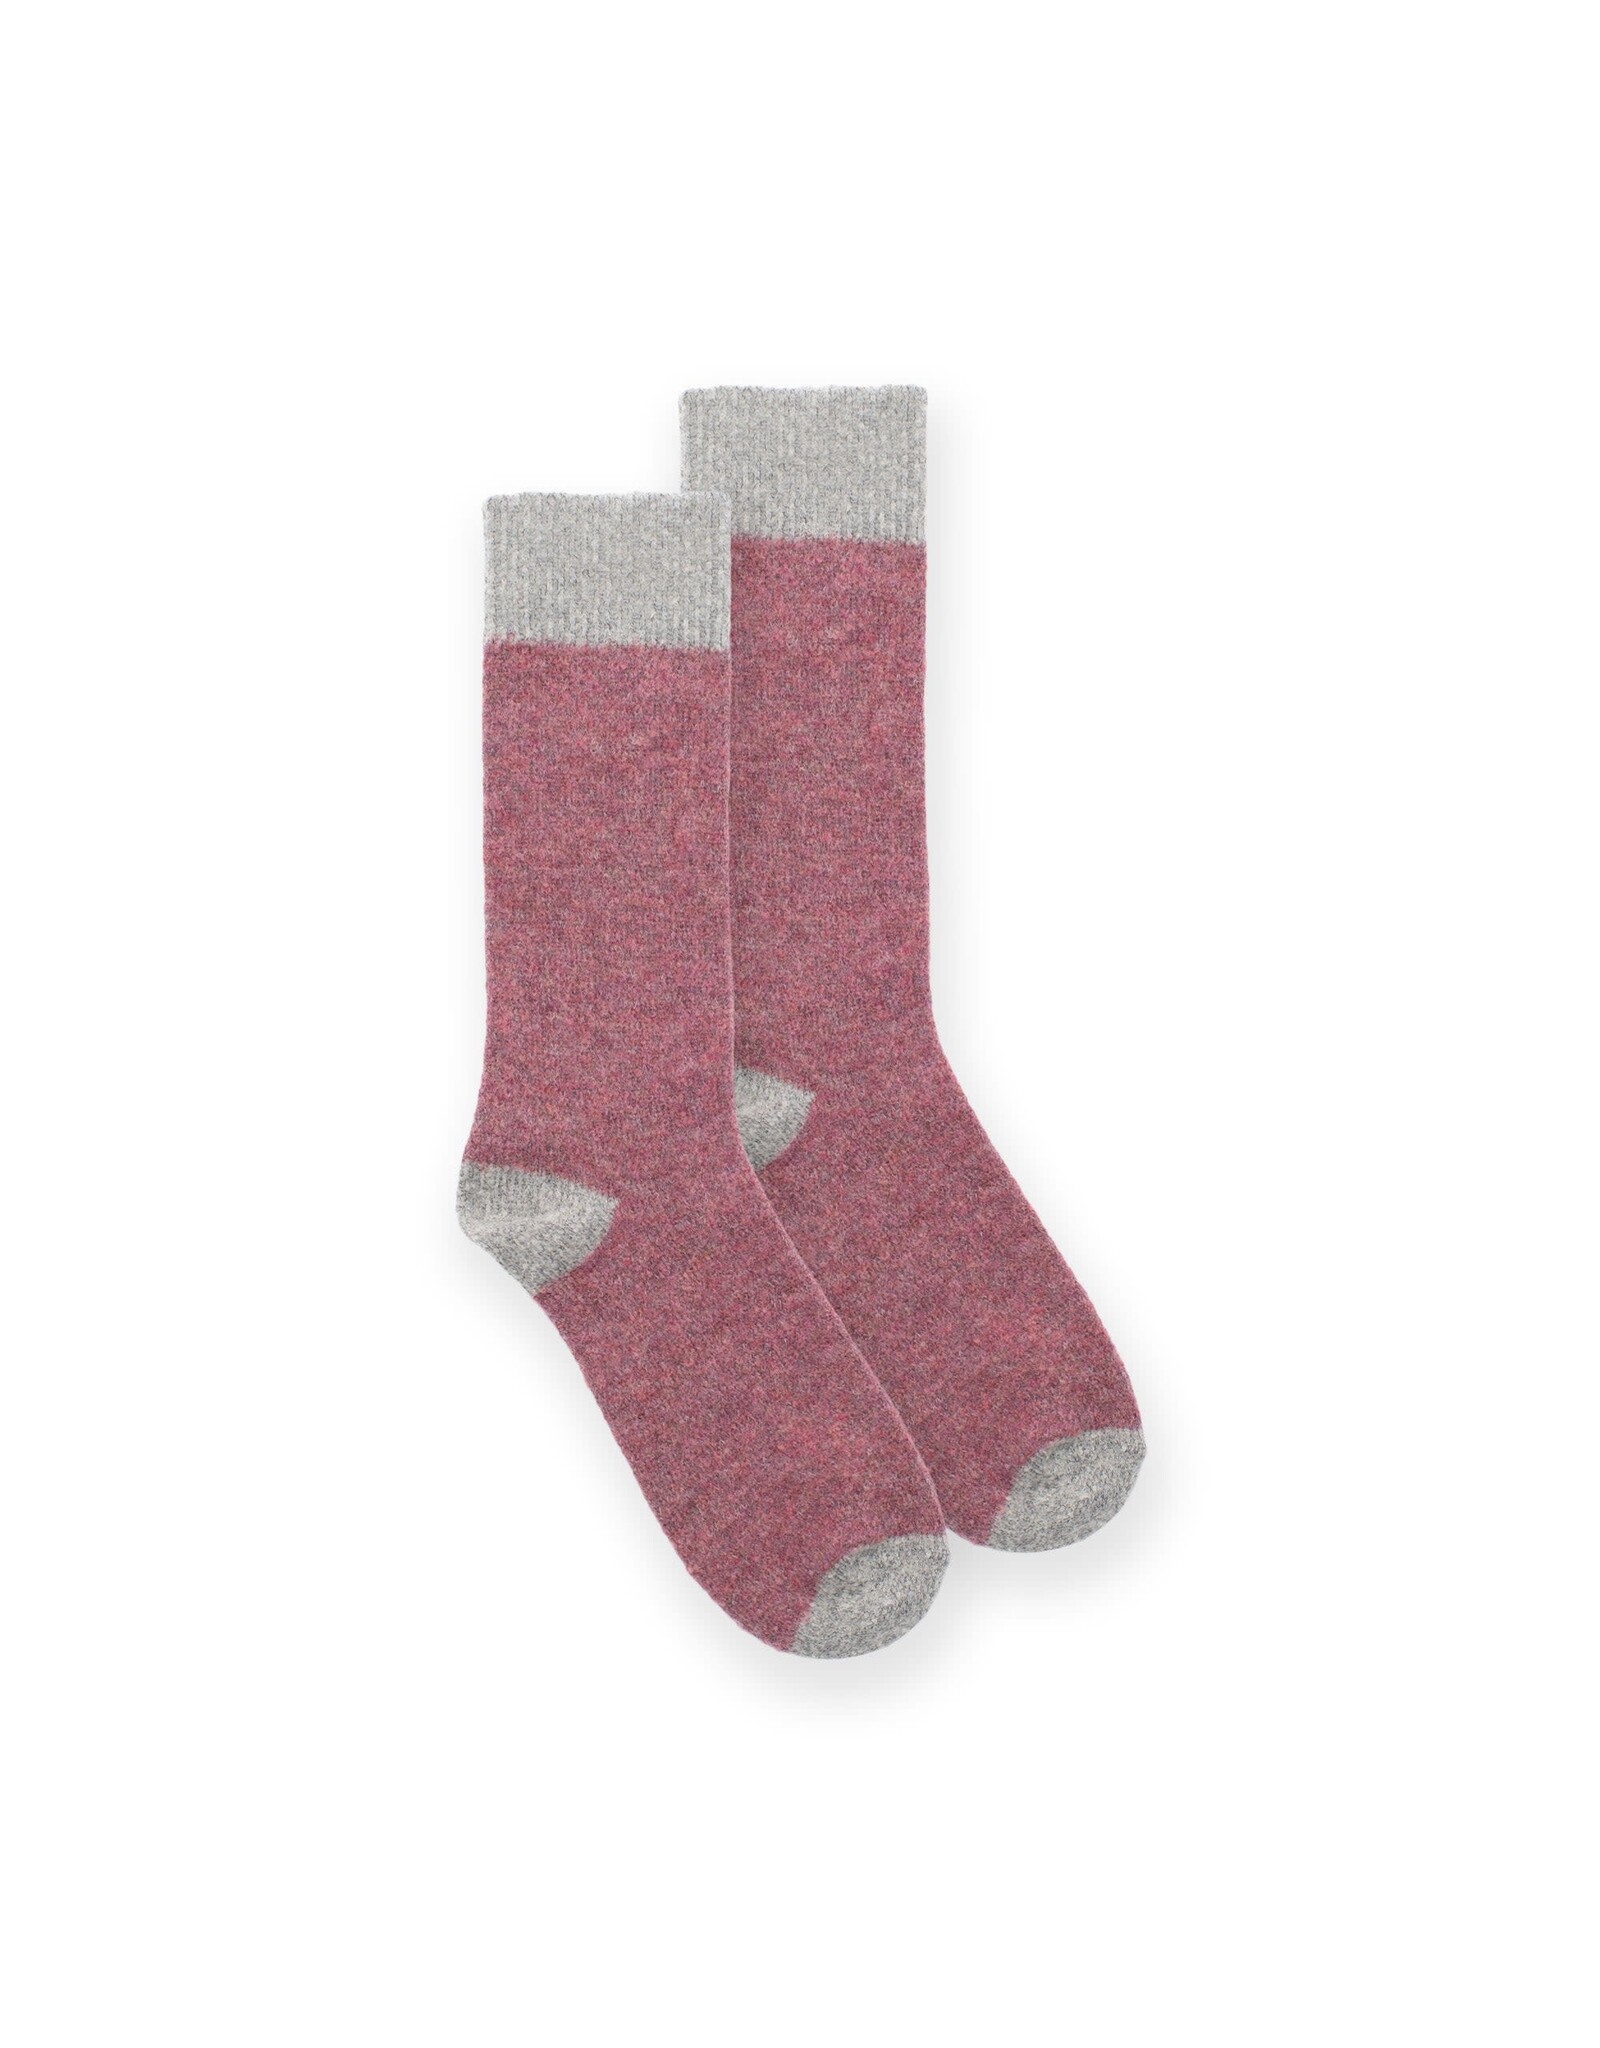 Wolvis Socks - Pink, Grey